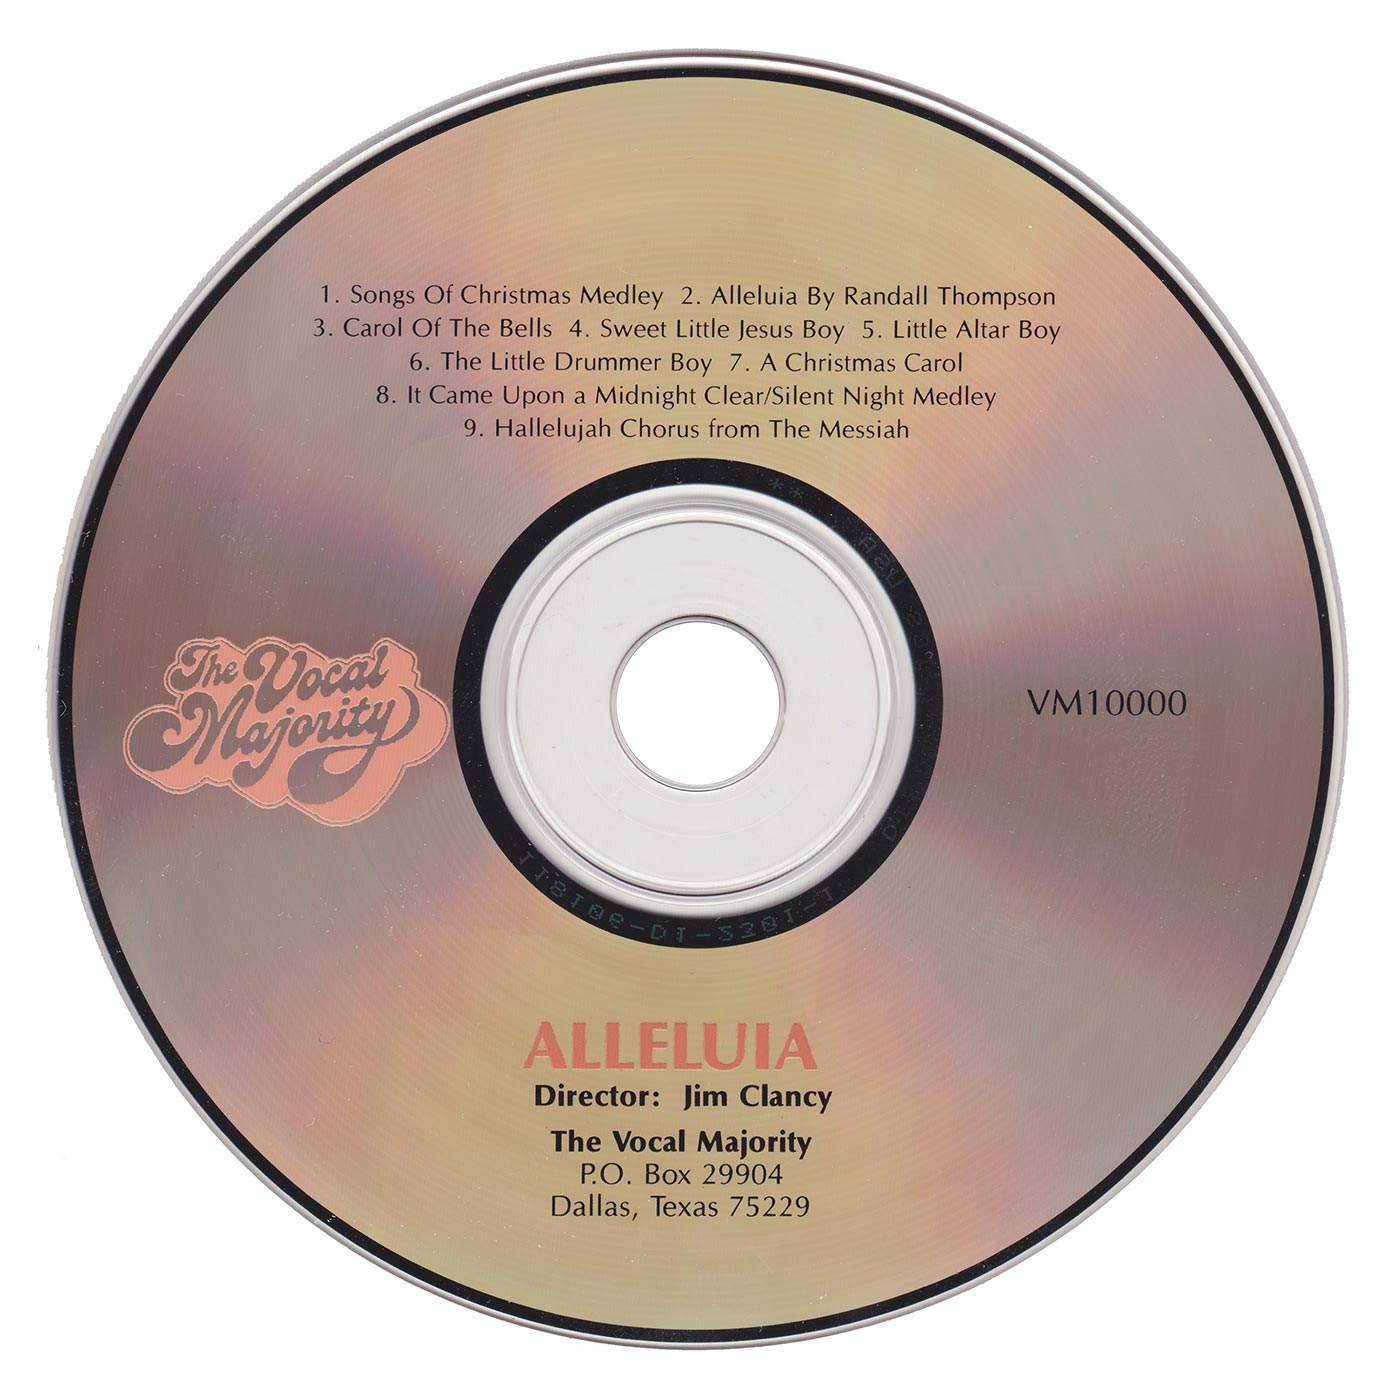 Disc Art: Alleluia